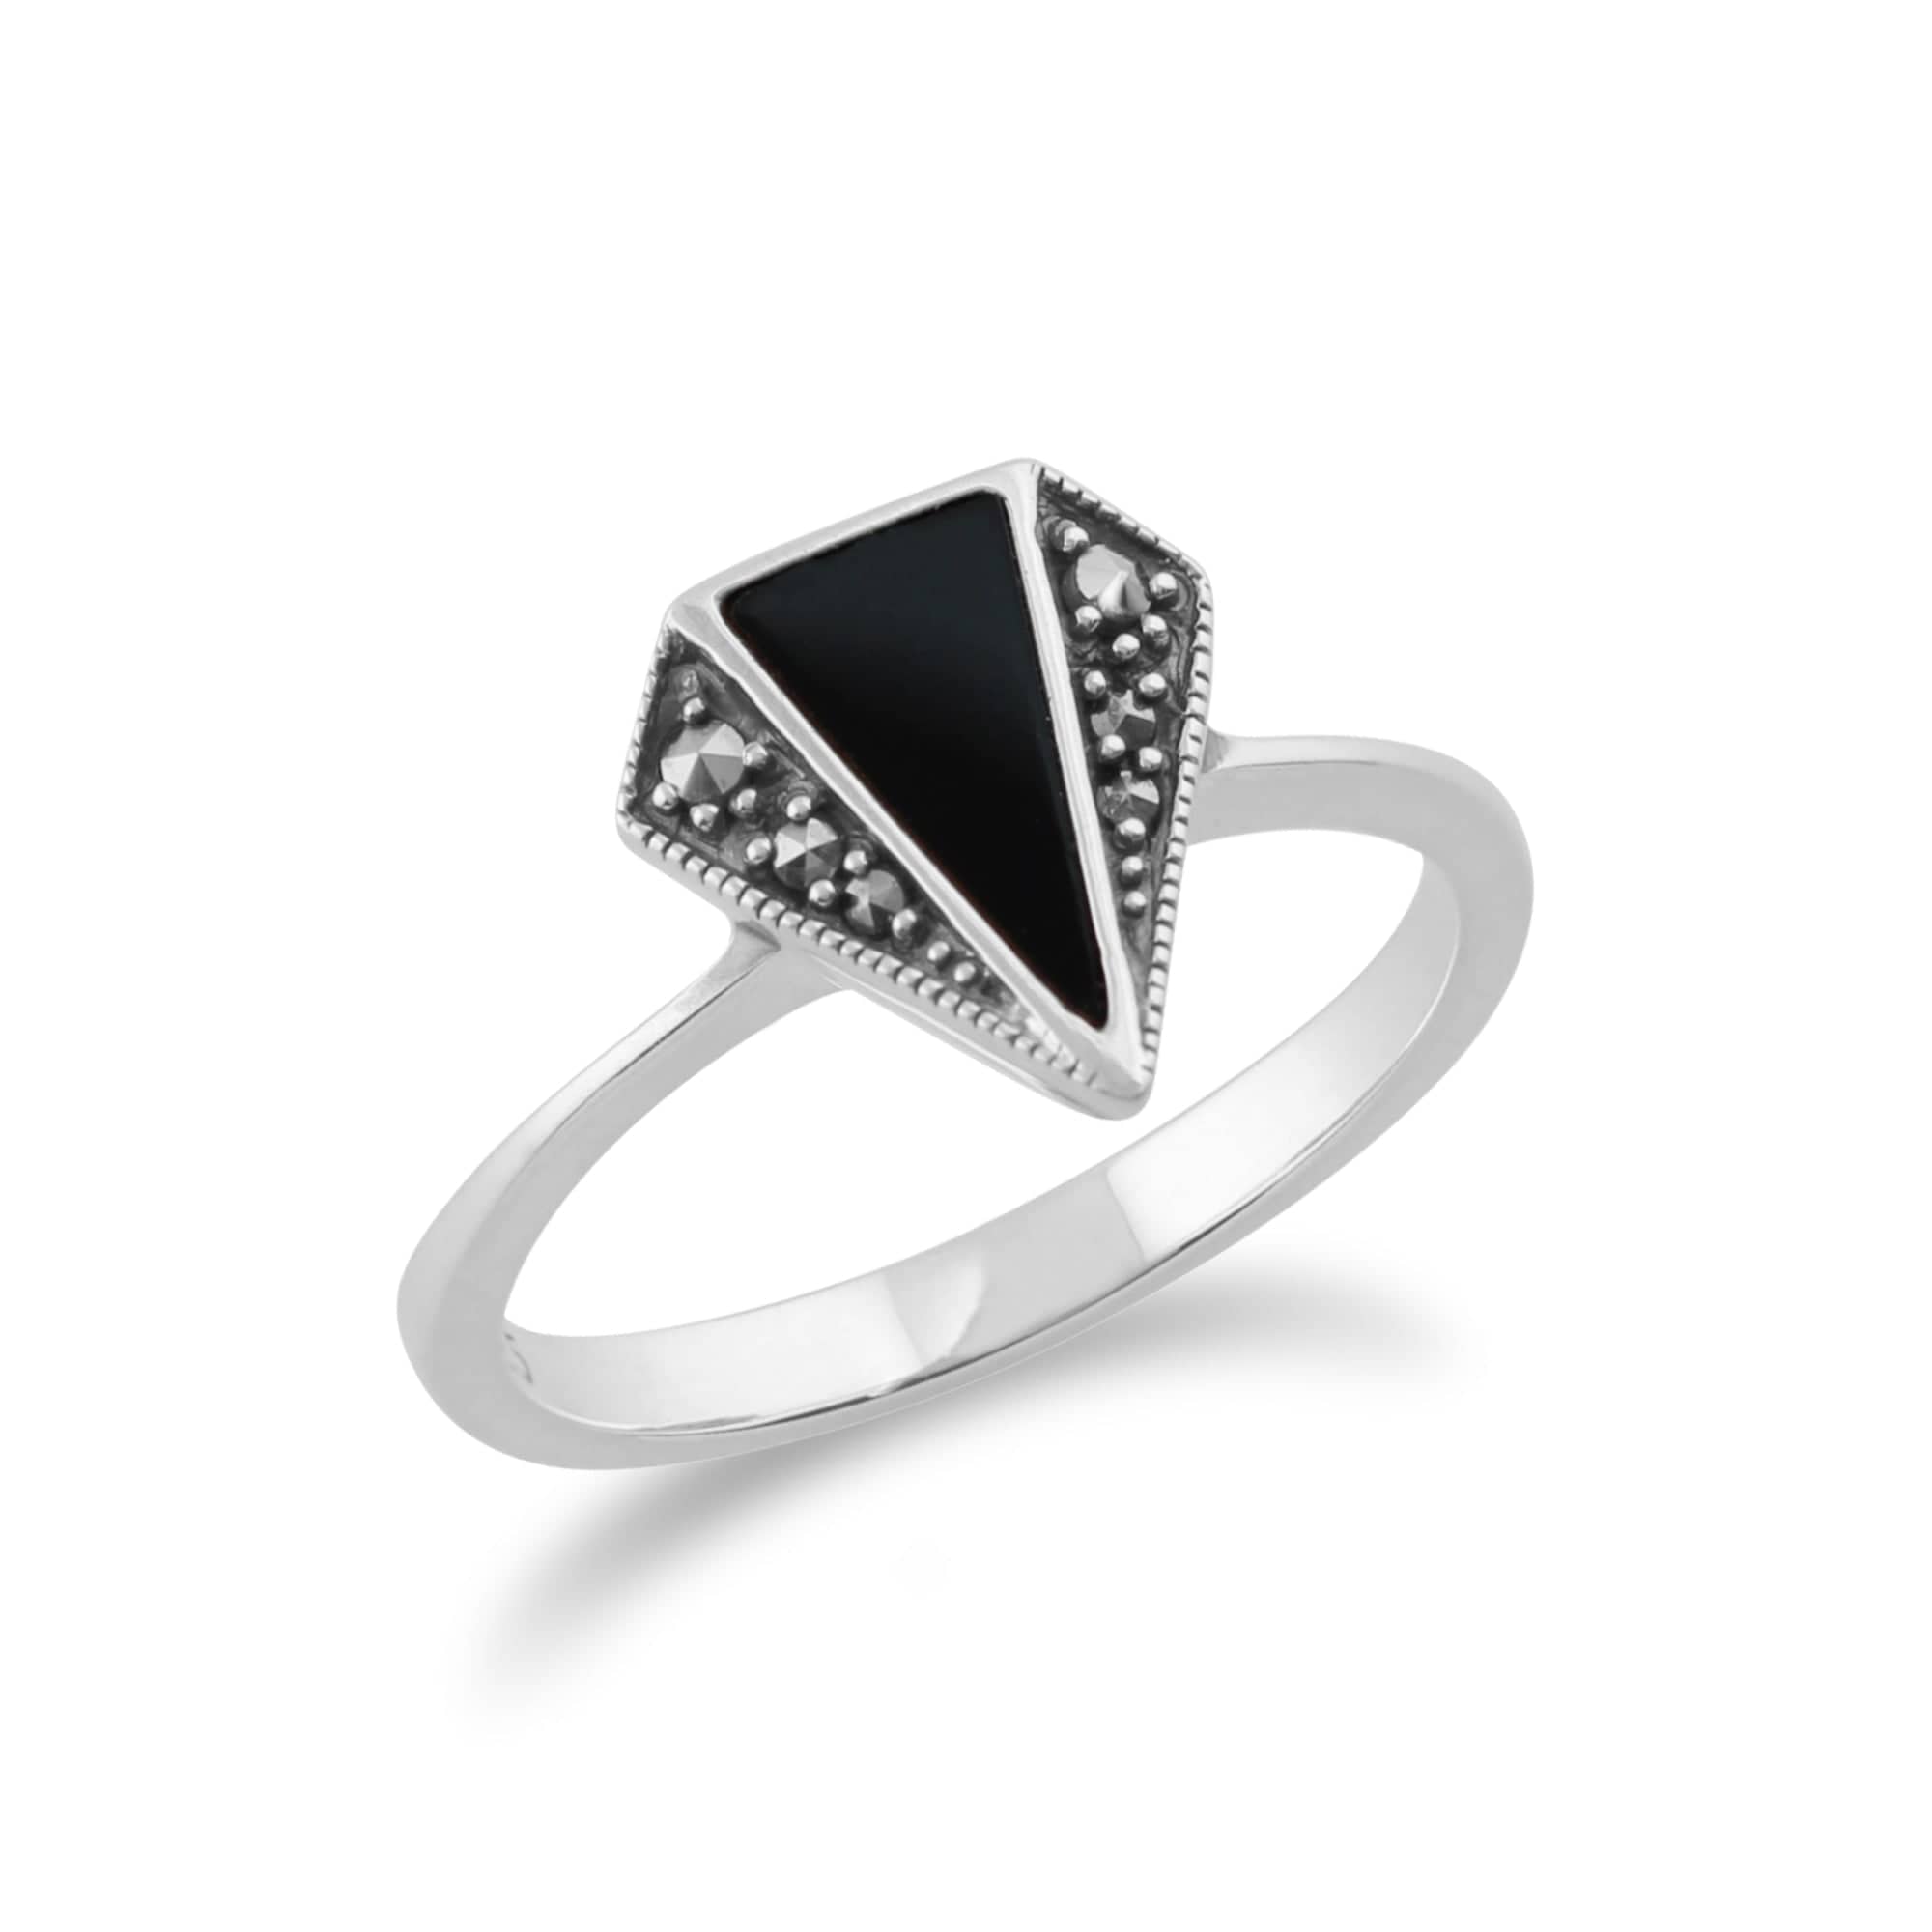 Art Deco Style Triangle Black Onyx & Marcasite Ring in 925 Sterling Silver - Gemondo